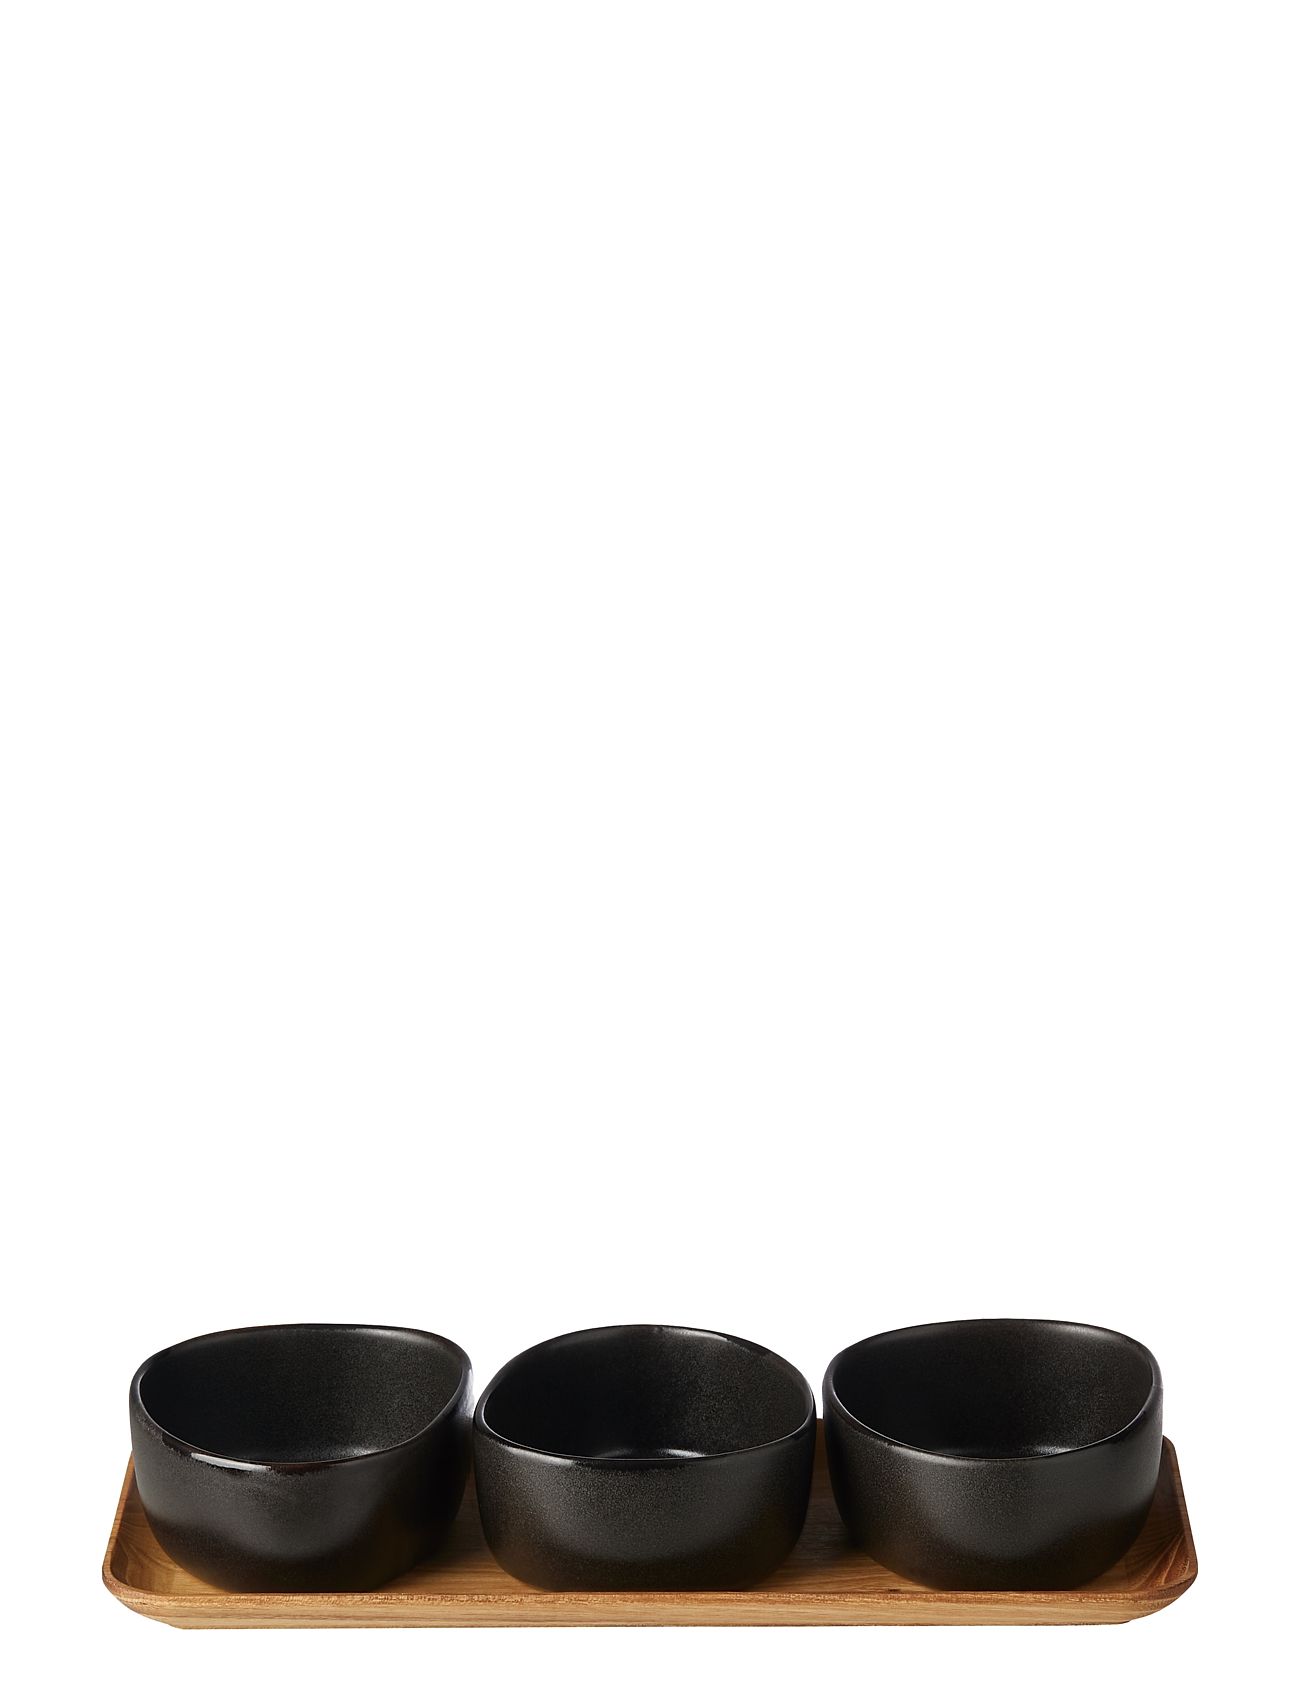 Raw 3 X Organic Titanium Black Bowl On Teakwooden Board Bowl Home Tableware Bowls & Serving Dishes Serving Bowls Black Aida